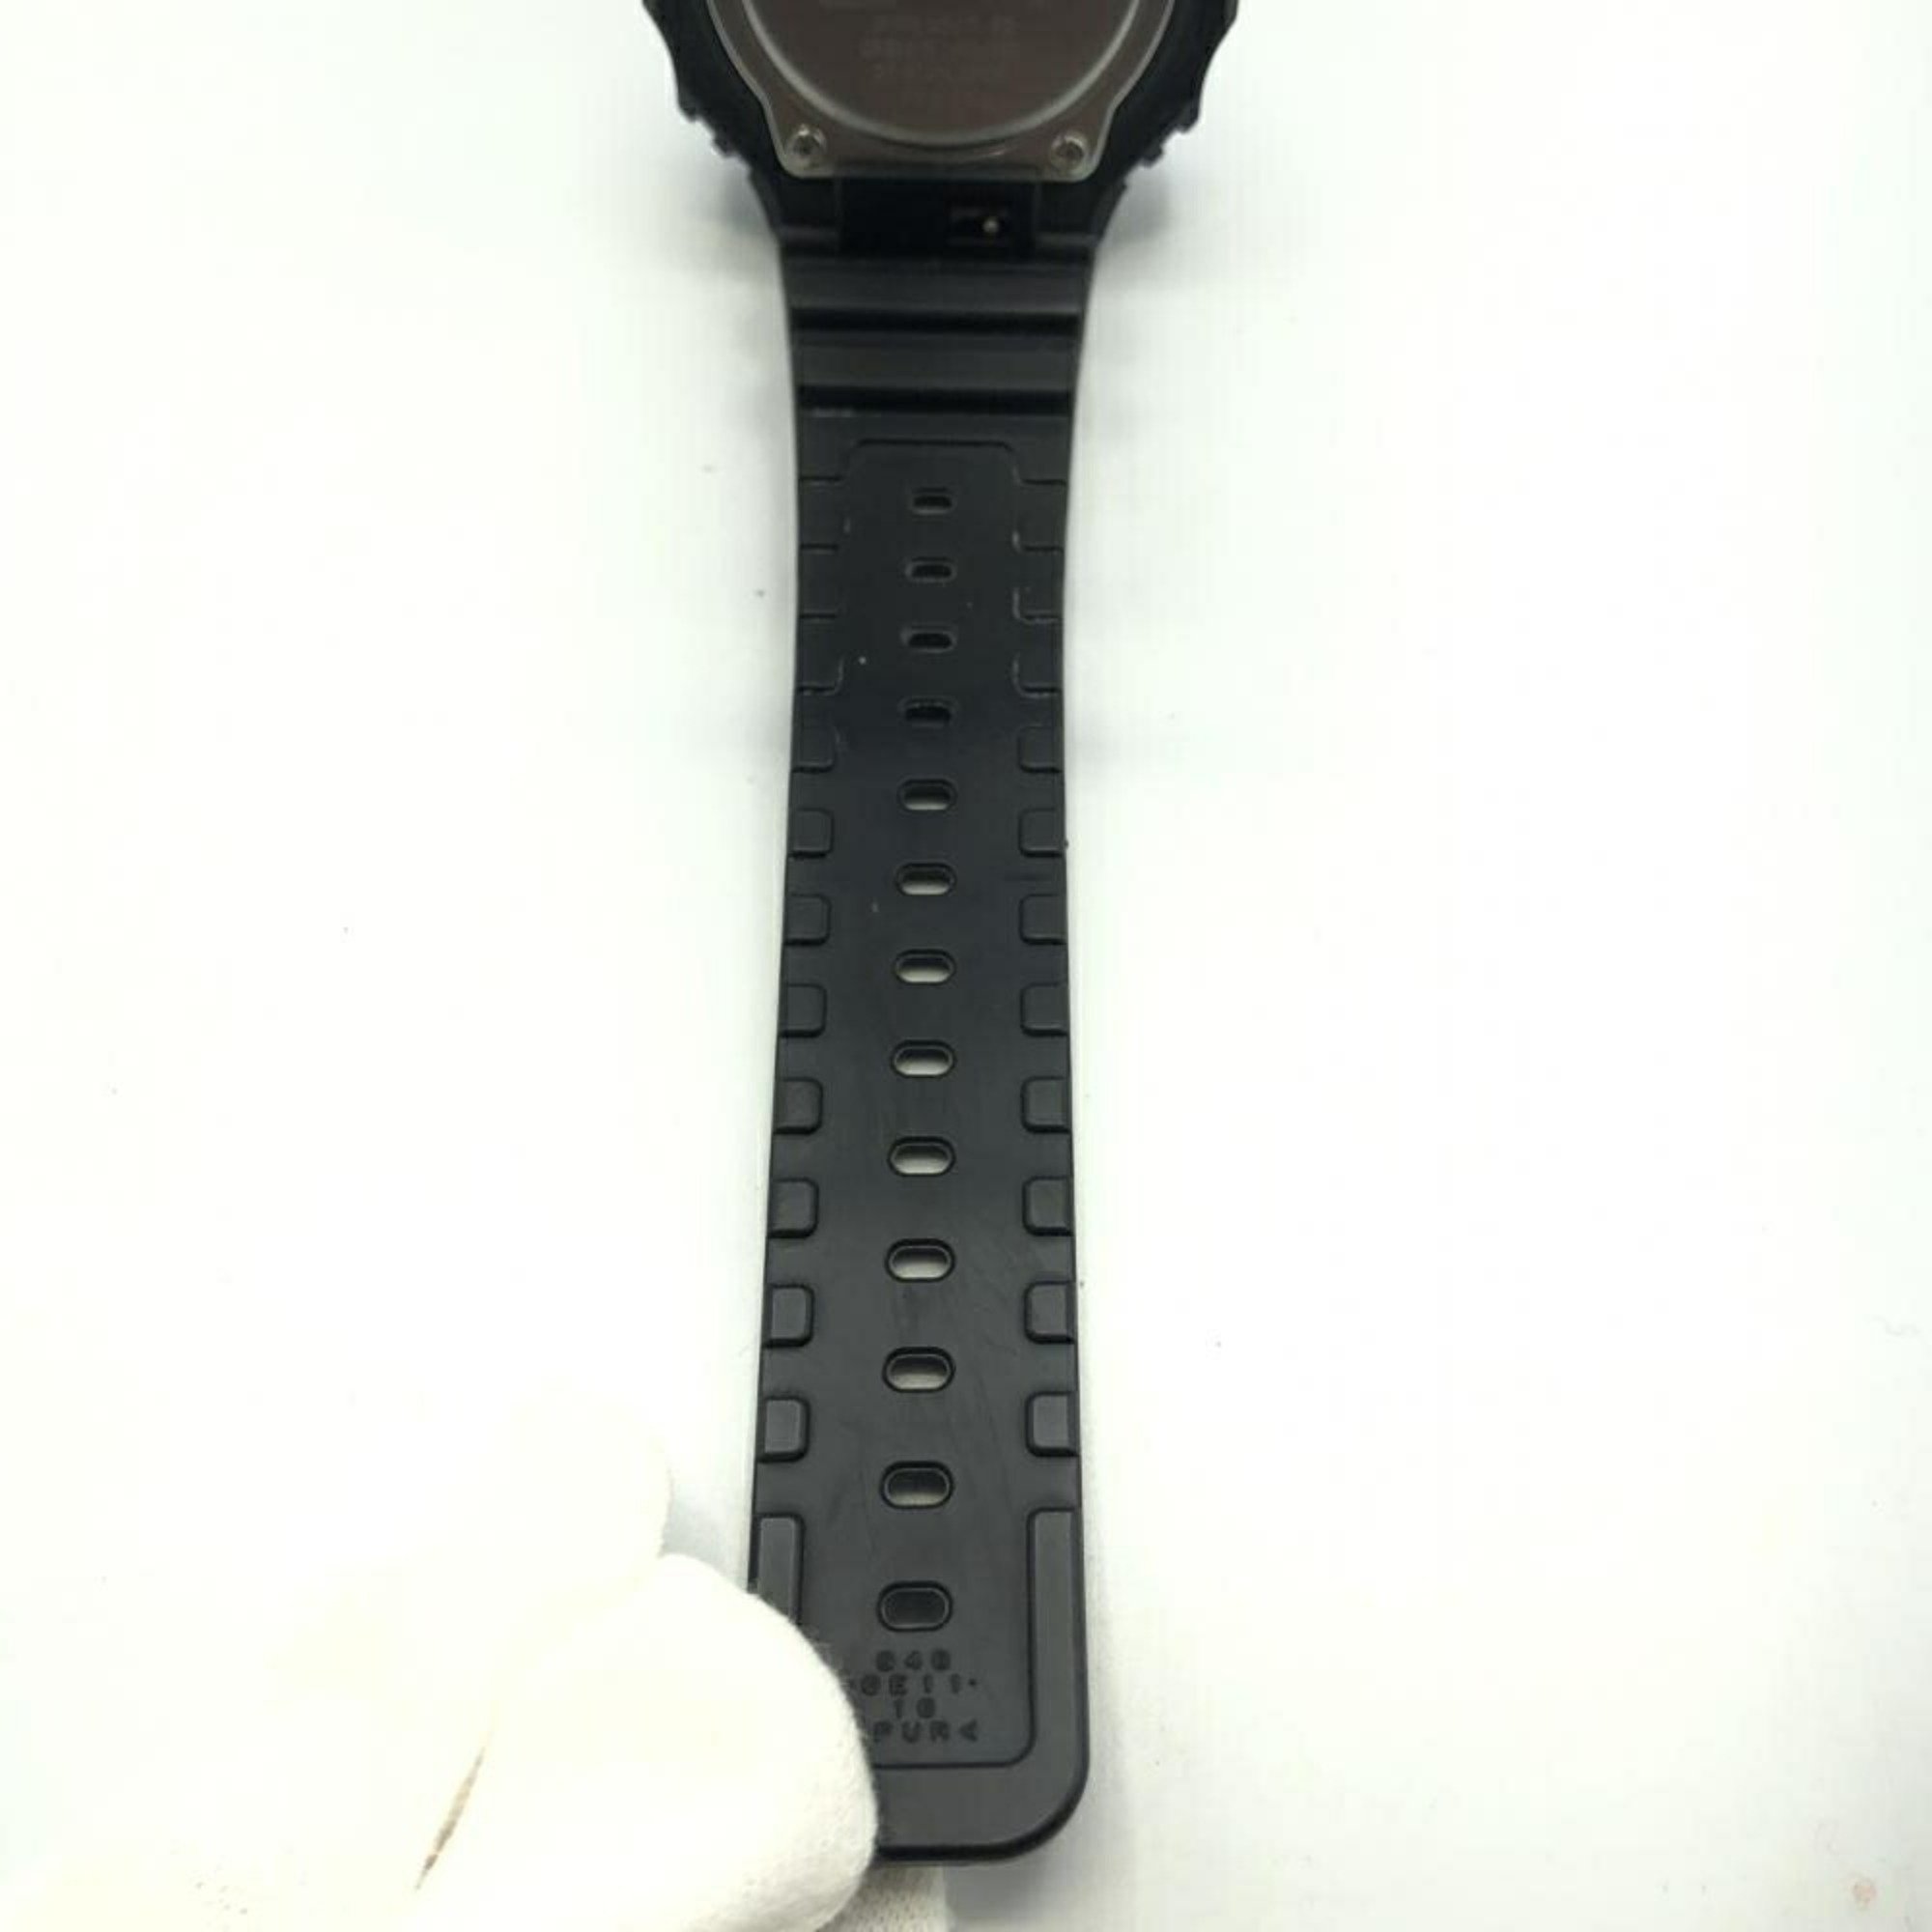 Casio G-SHOCK Watch GA-2100-1A1JF 2100 Series G-Shock Black